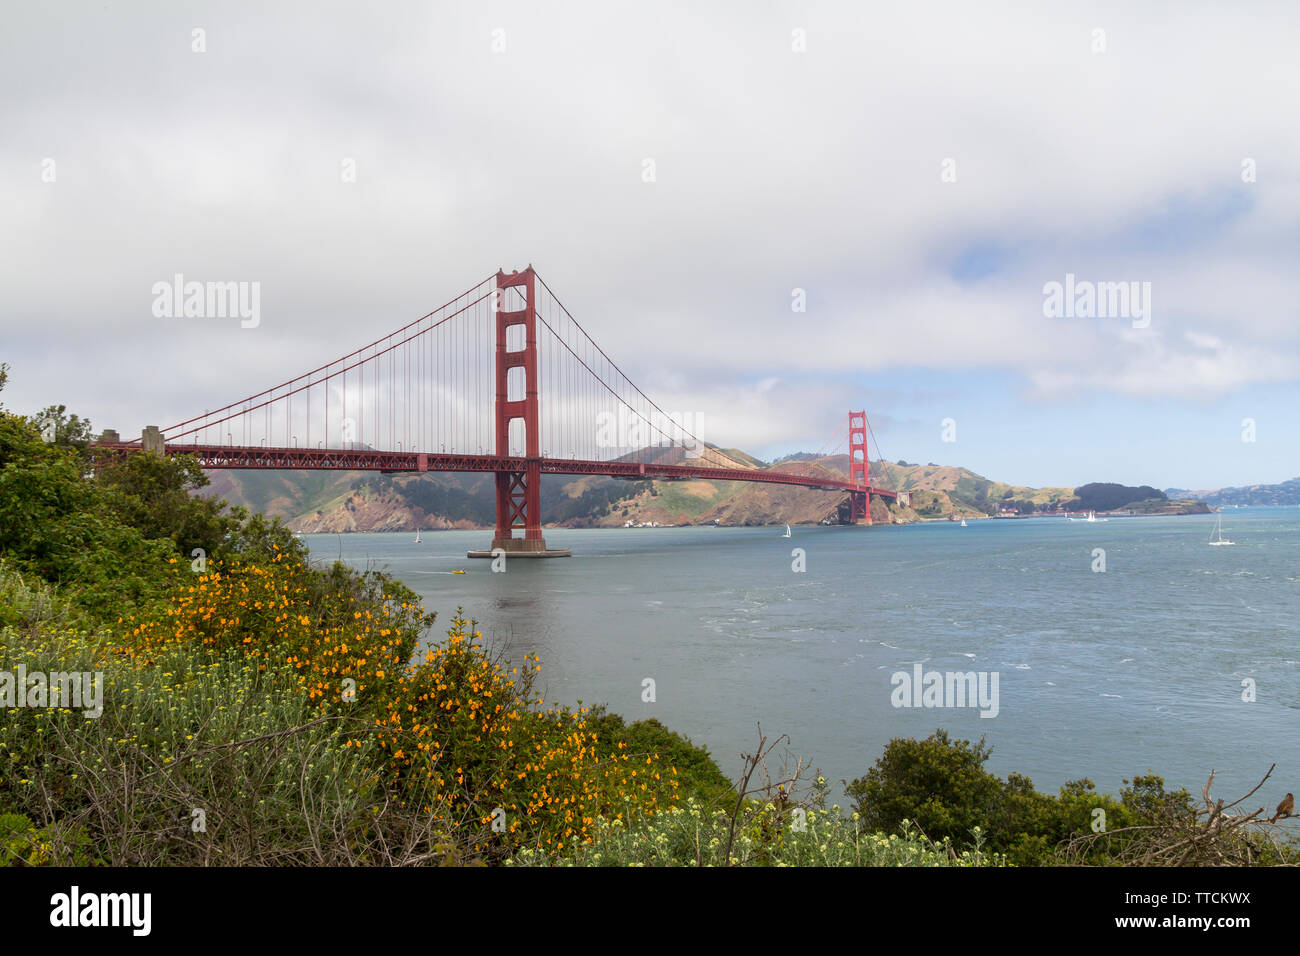 The Golden Gate bridge in San Francisco bay, United States Stock Photo